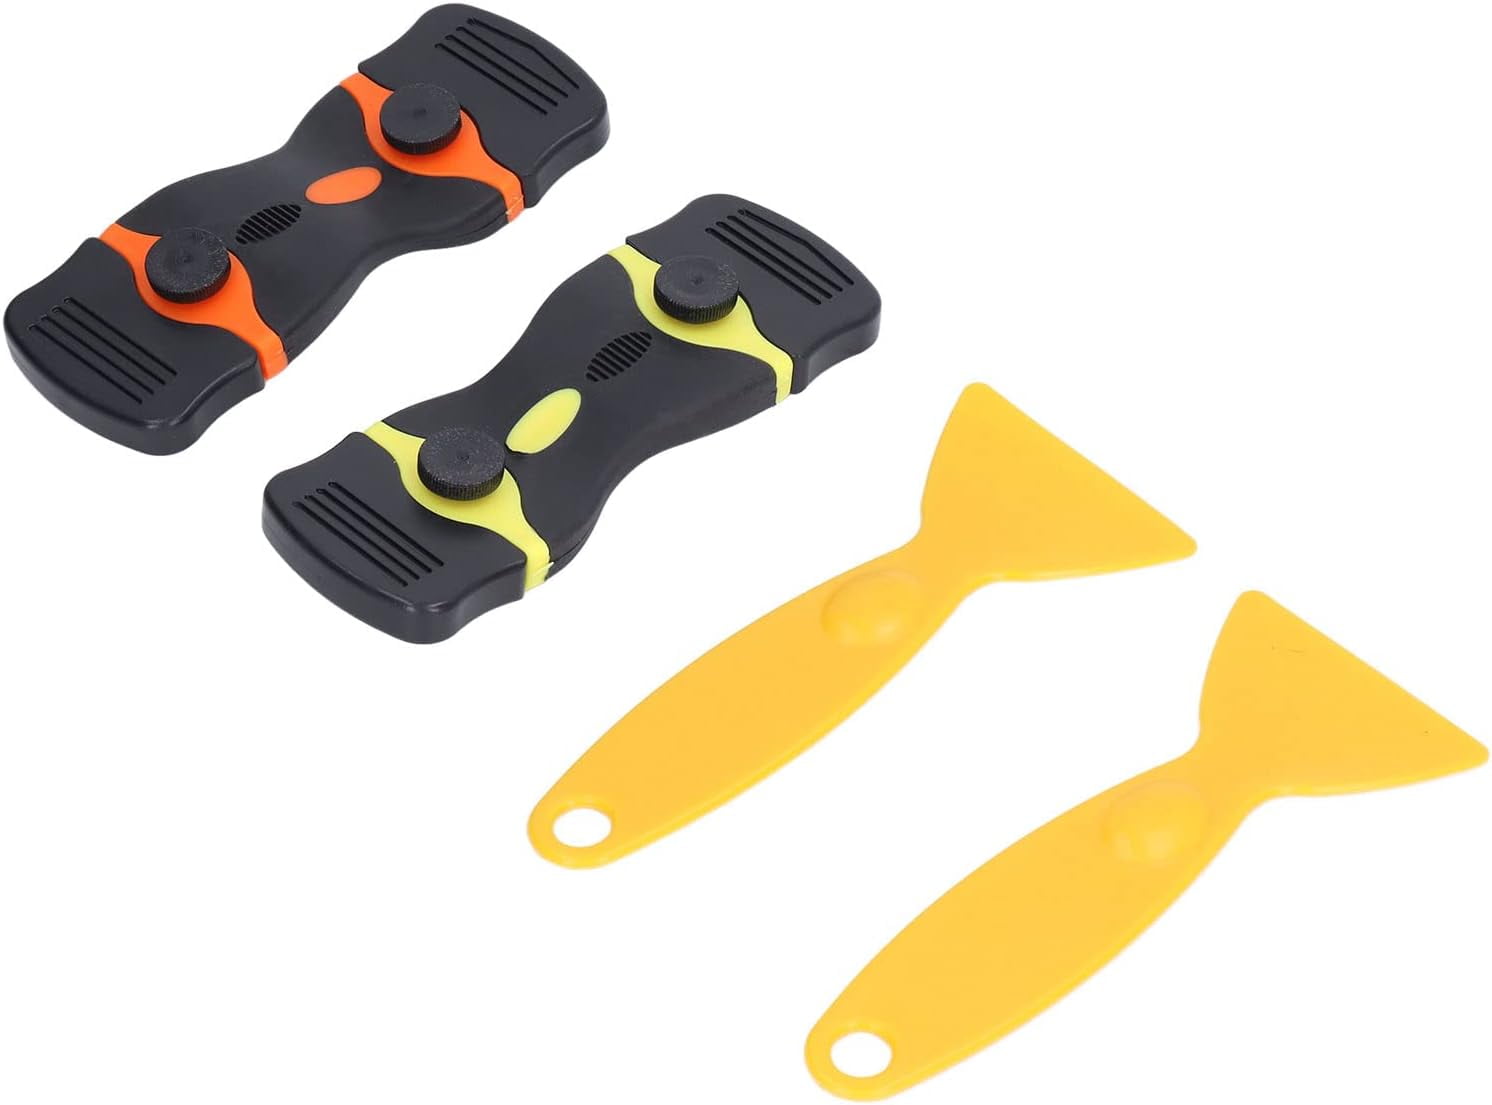 OAVQHLG3B Plastic Razor Blade Scraper,Scraper Tool with 10PCS Plastic  Blades,Cleaning Scraper Remover for